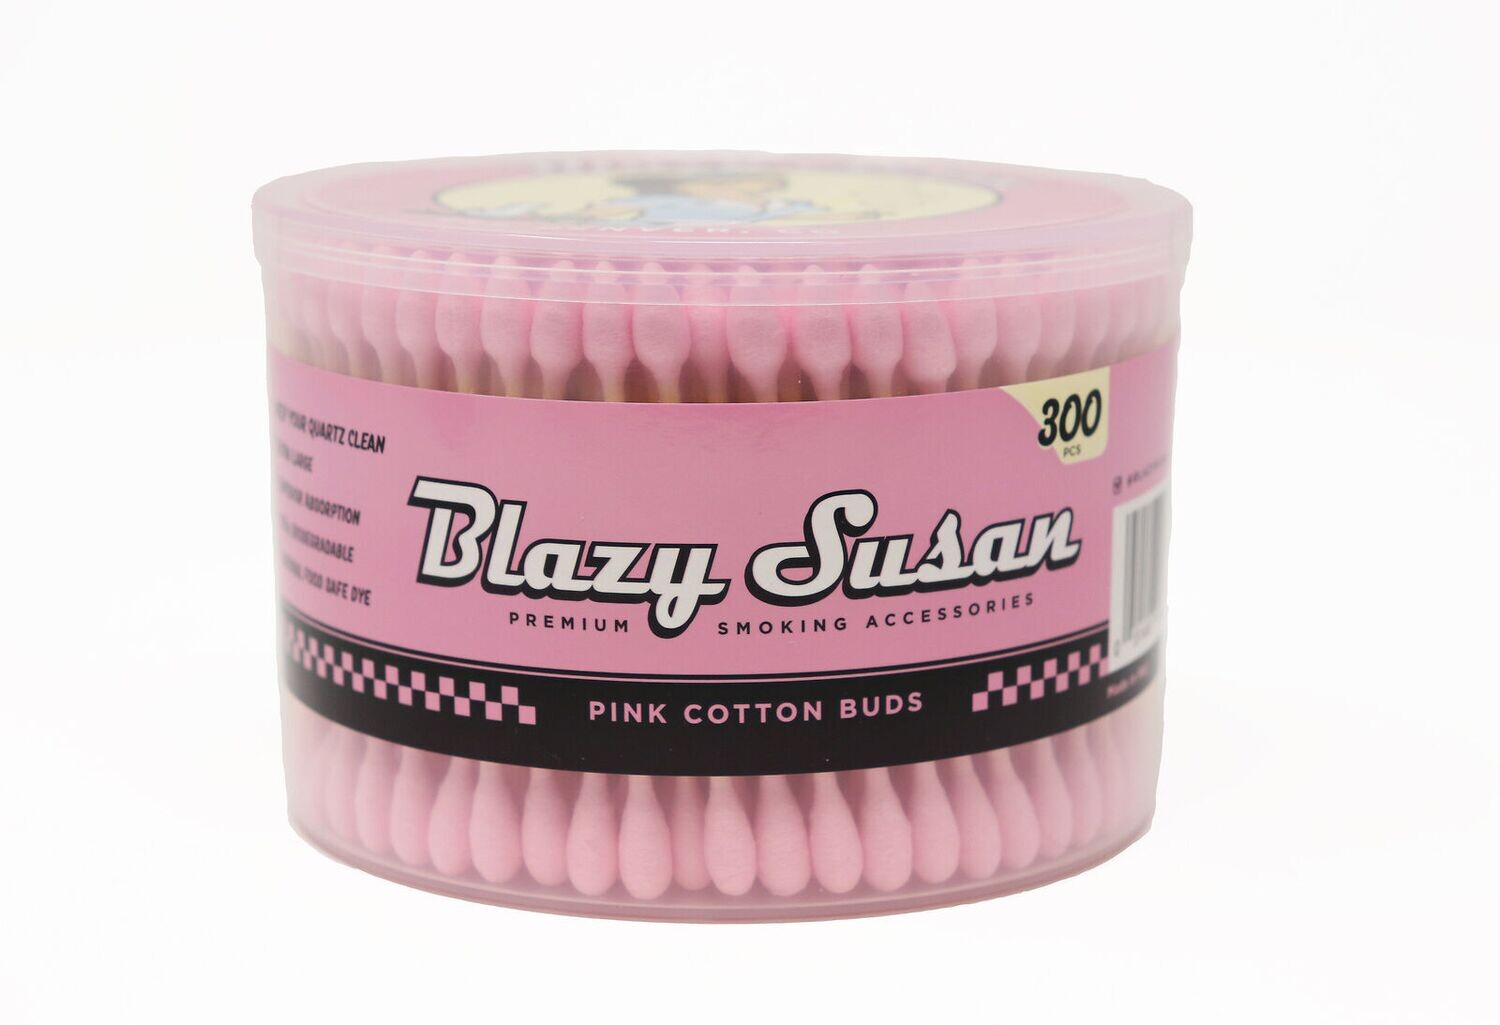 Blazy Susan Pink Cotton Buds 300ct